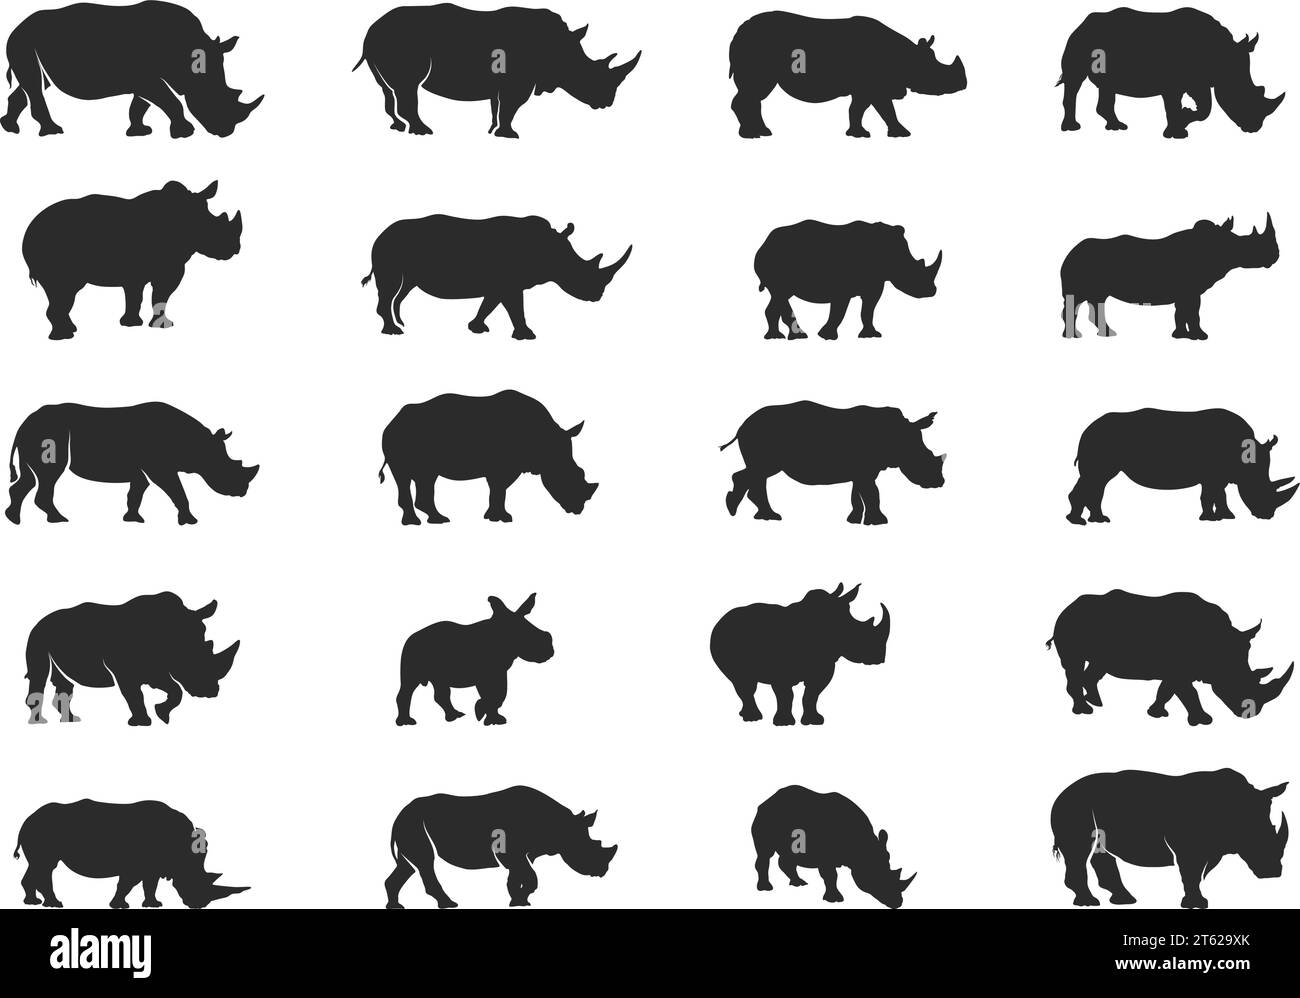 Rhino silhouettes, Rhinos silhouette, Rhino vector illustration, Rhino clipart, Rhino icon bundle Stock Vector